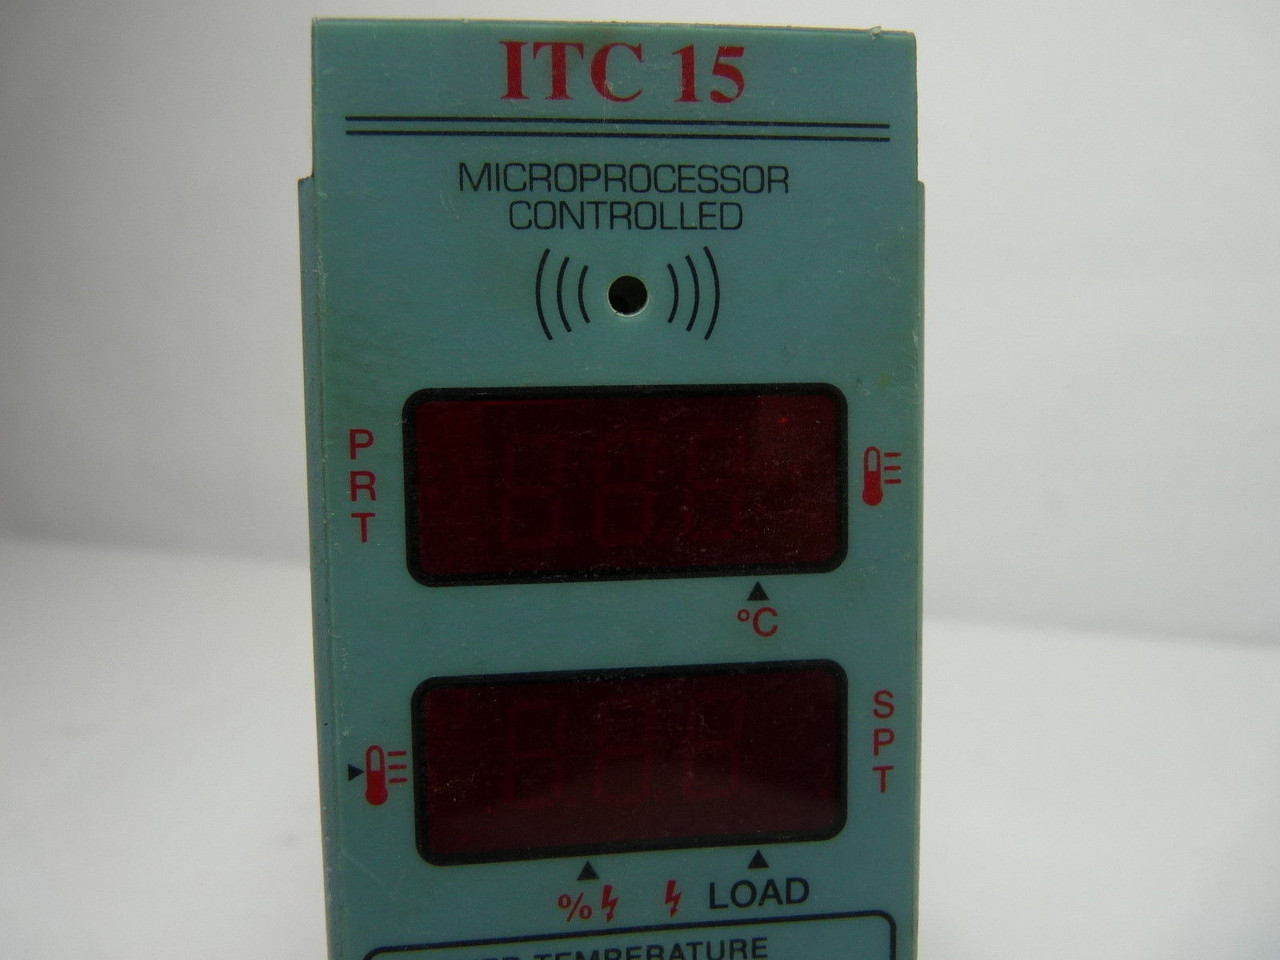 Industrial Timer Co. UTAC-15 Temperature Control Module USED